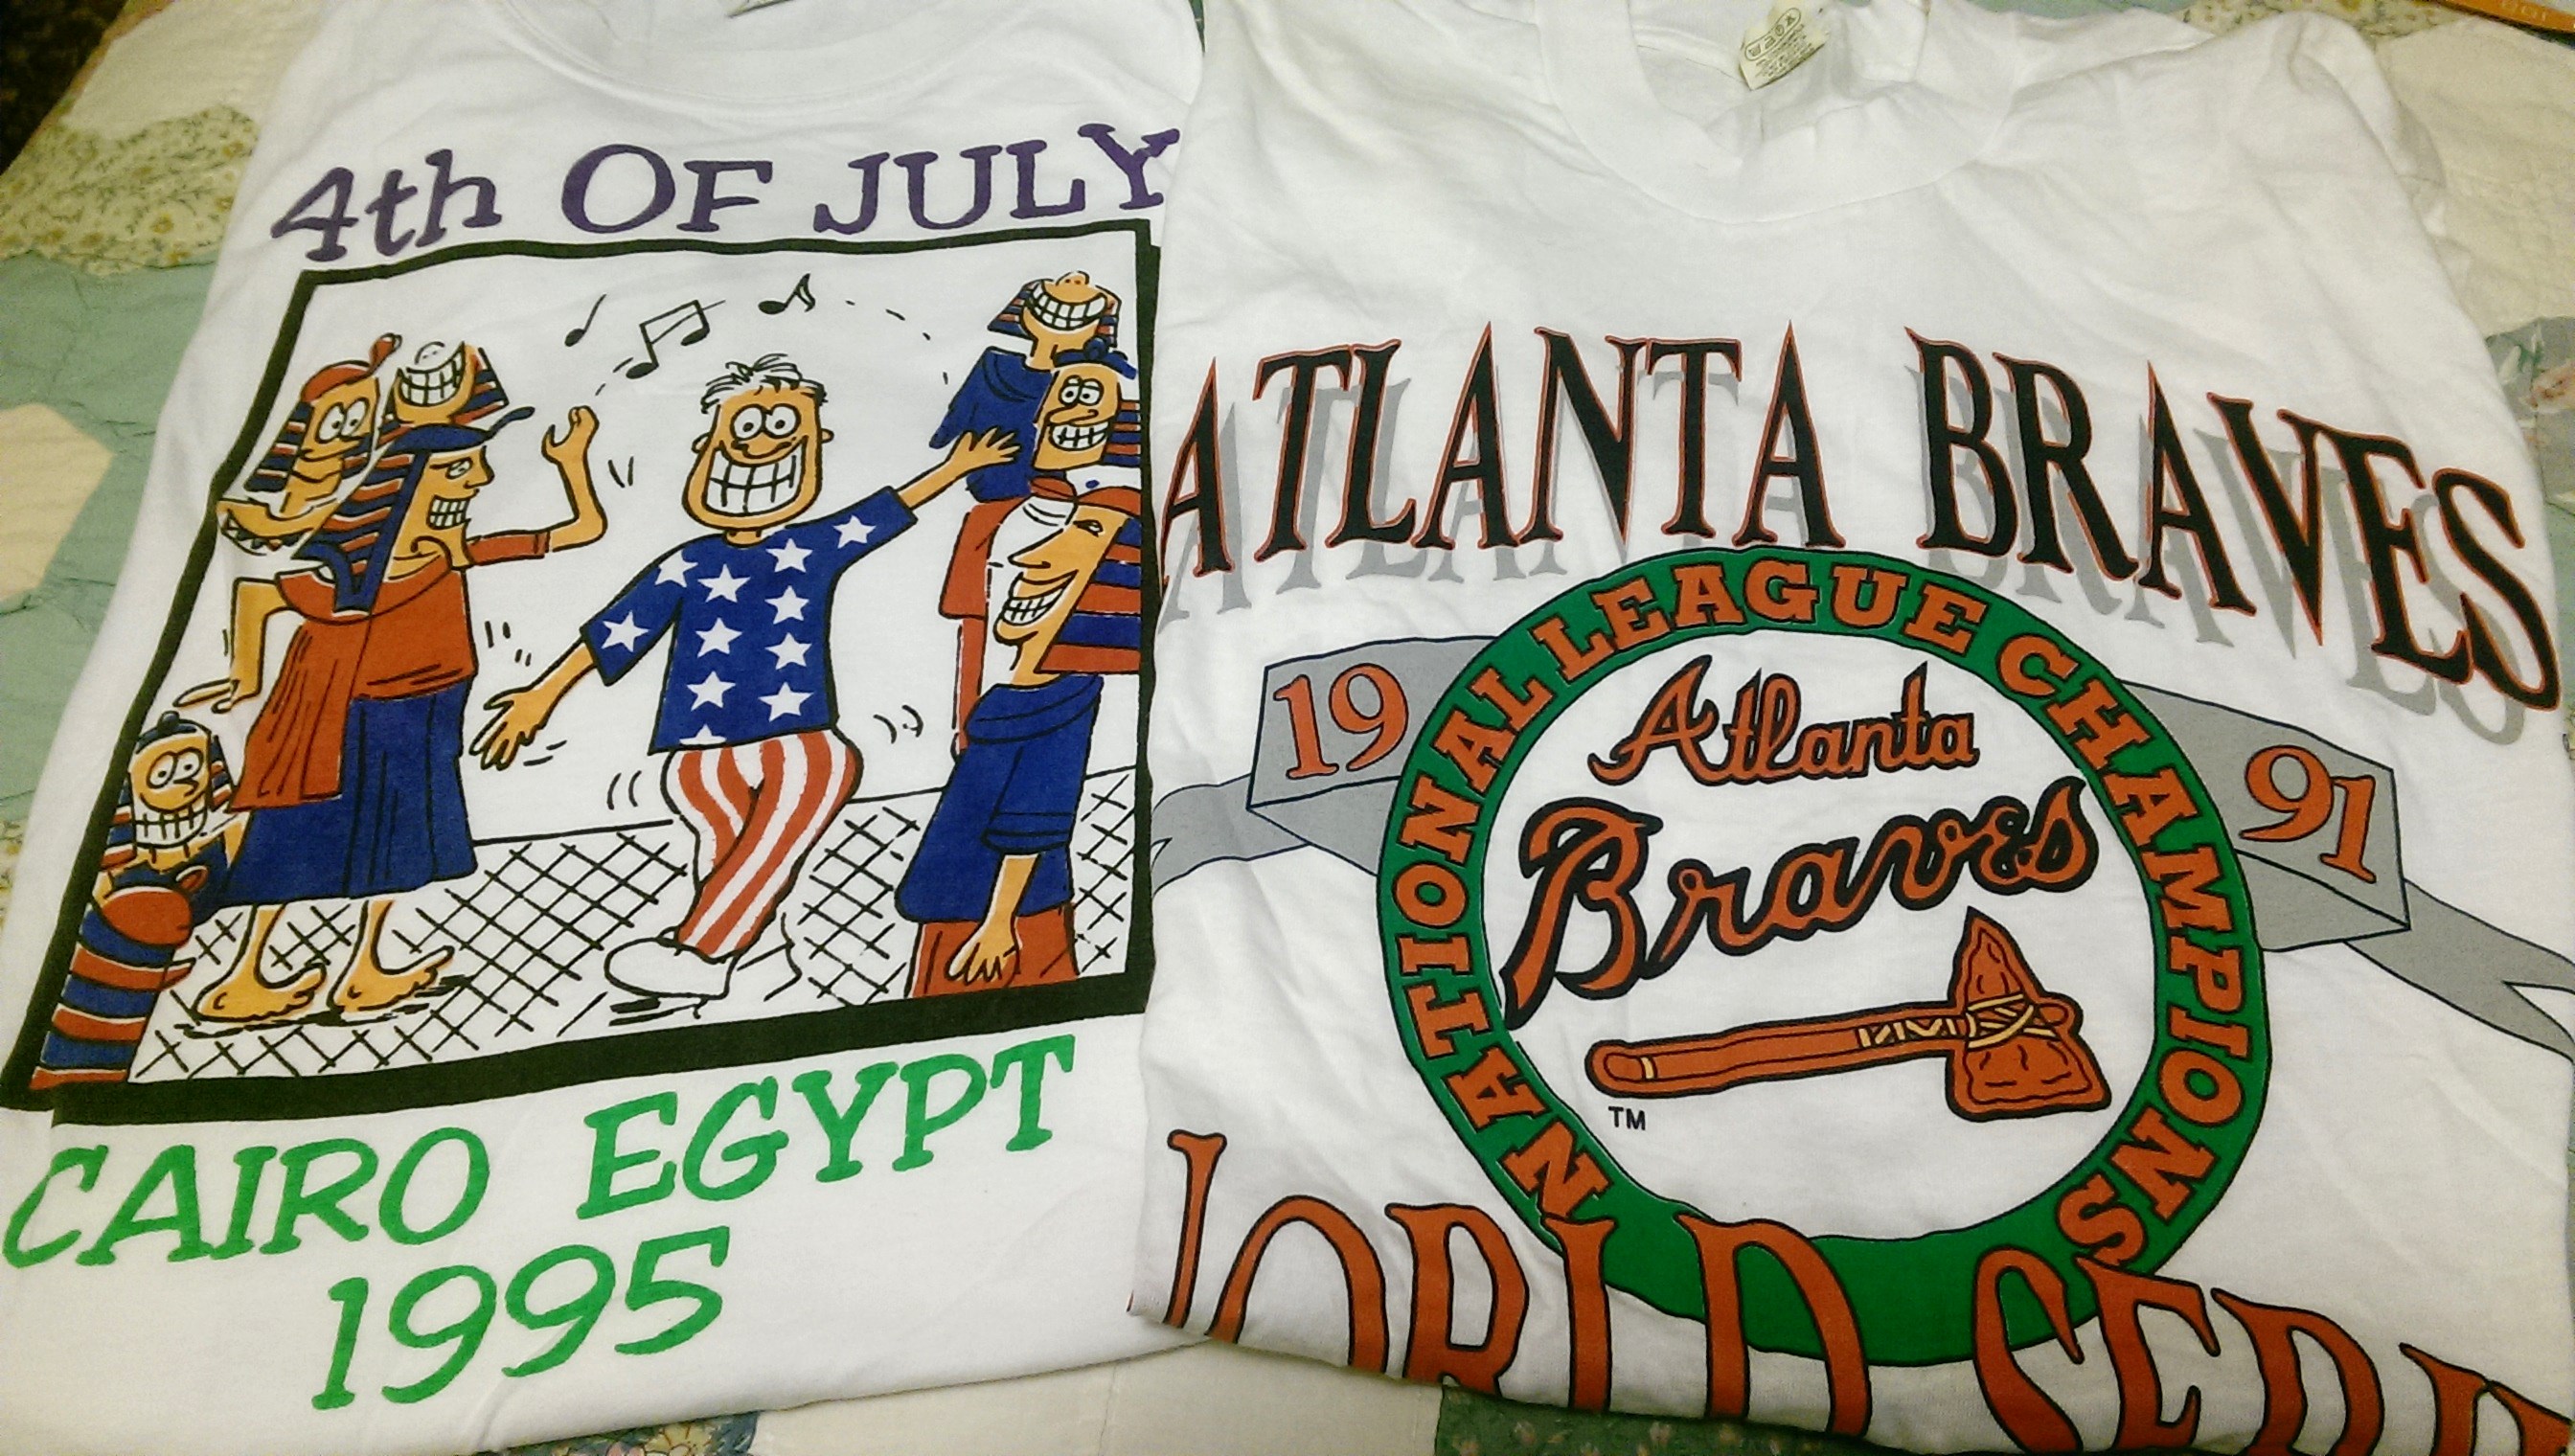 Blog - 4th of July - Cairo and Braves Baseball